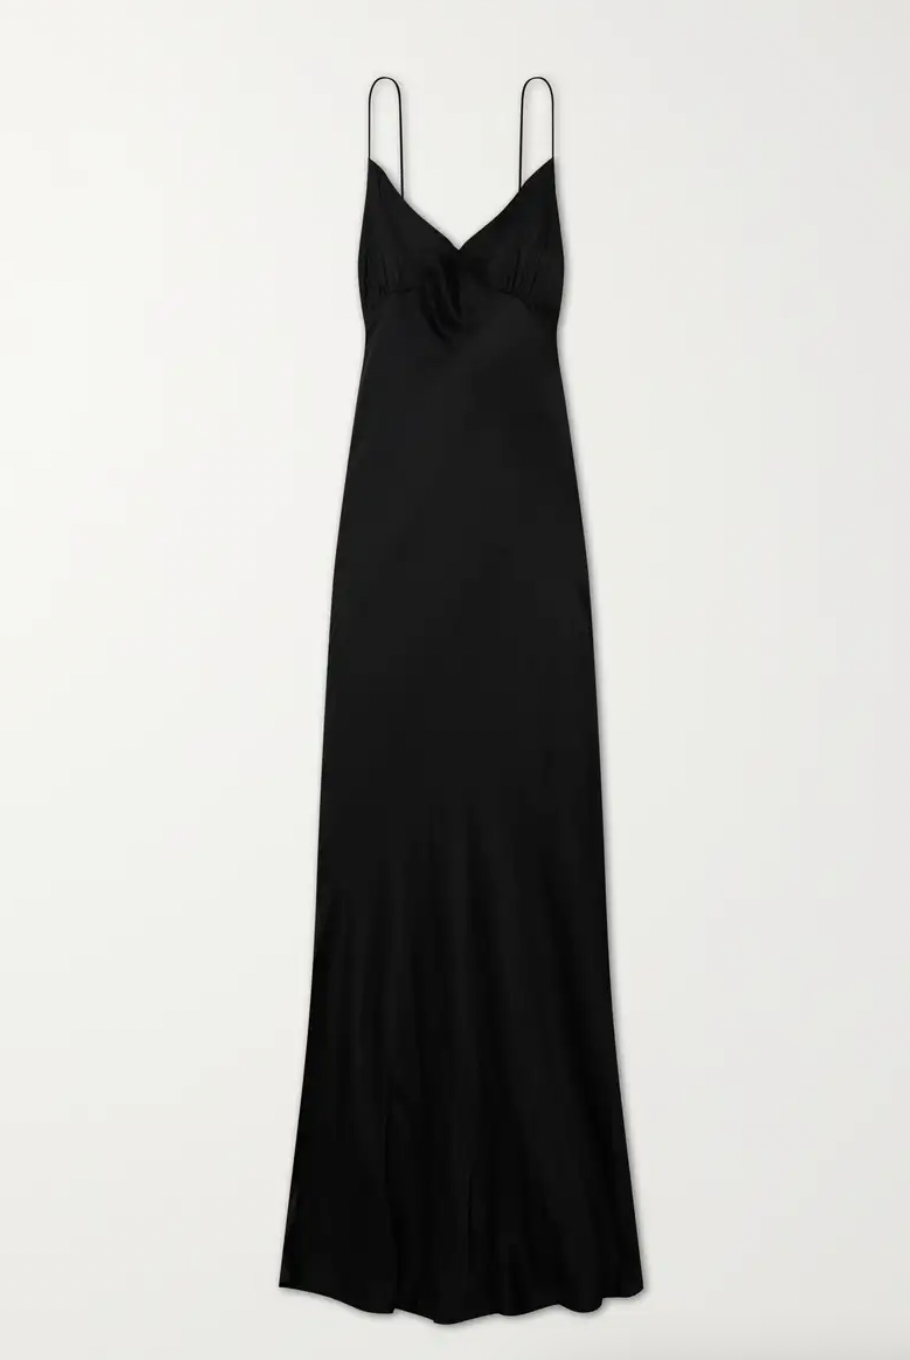 Product Image for Santiana Maxi Dress, Black